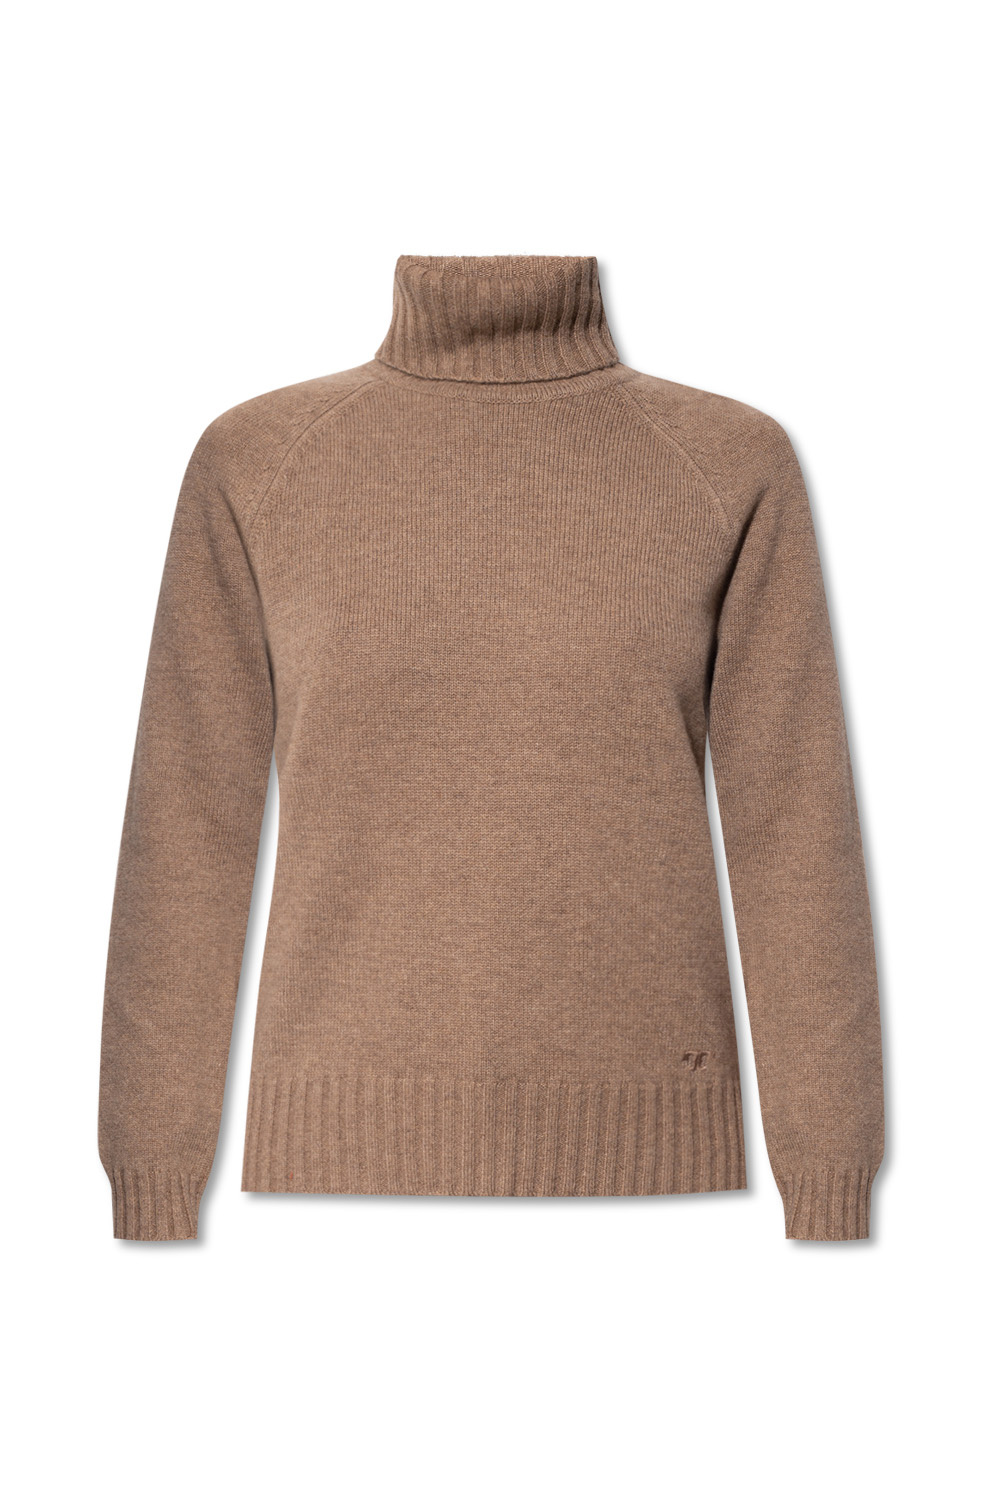 Tory Burch Cashmere turtleneck sweater | Women's Clothing | Vitkac